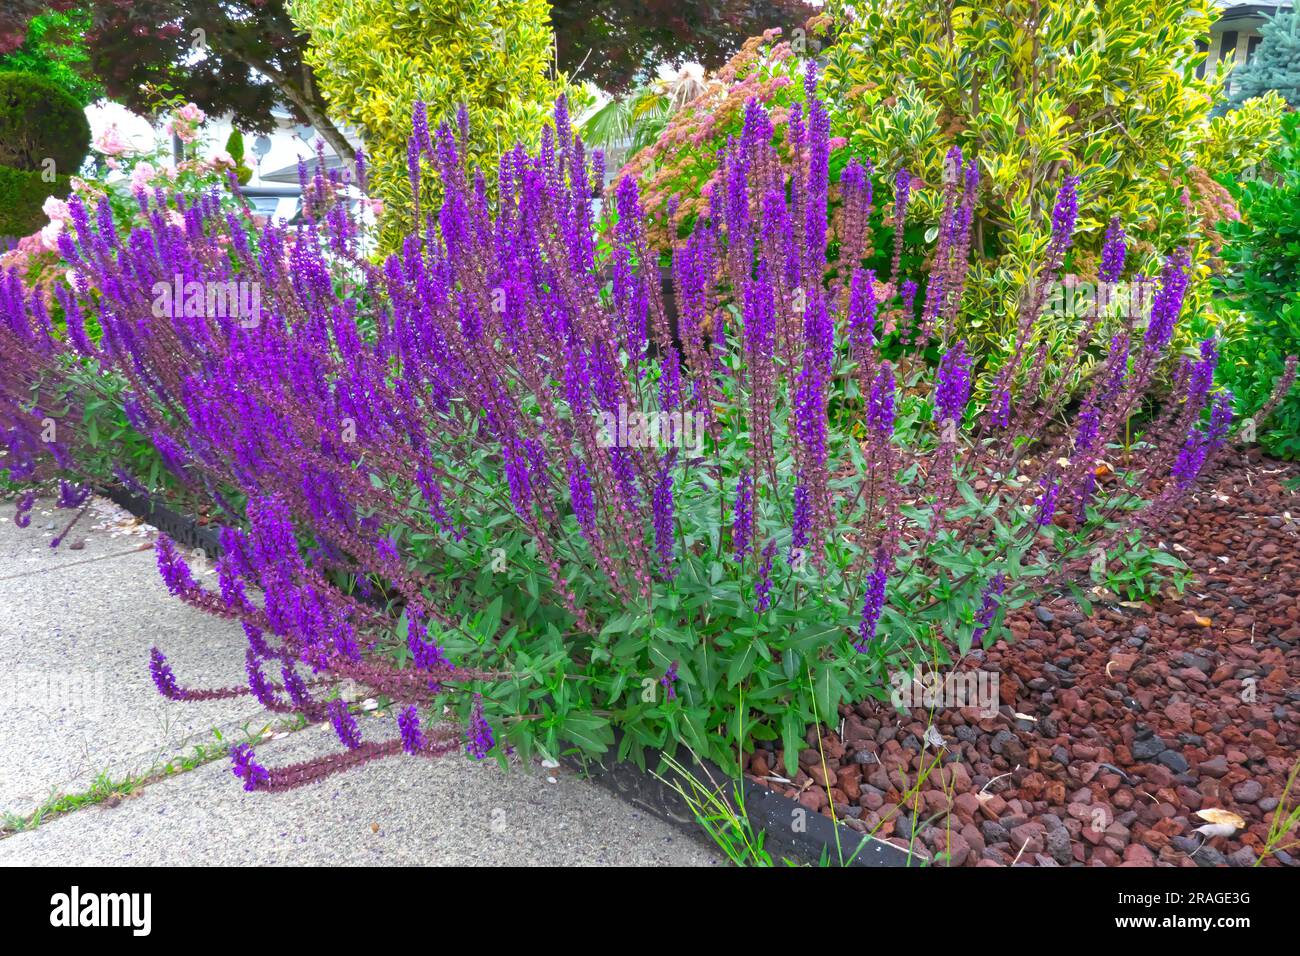 Salvia nemorosa - a woodland sage, Balkan clary, blue sage or wild sage - hardy herbaceous perennial. B. C., Canada. Stock Photo